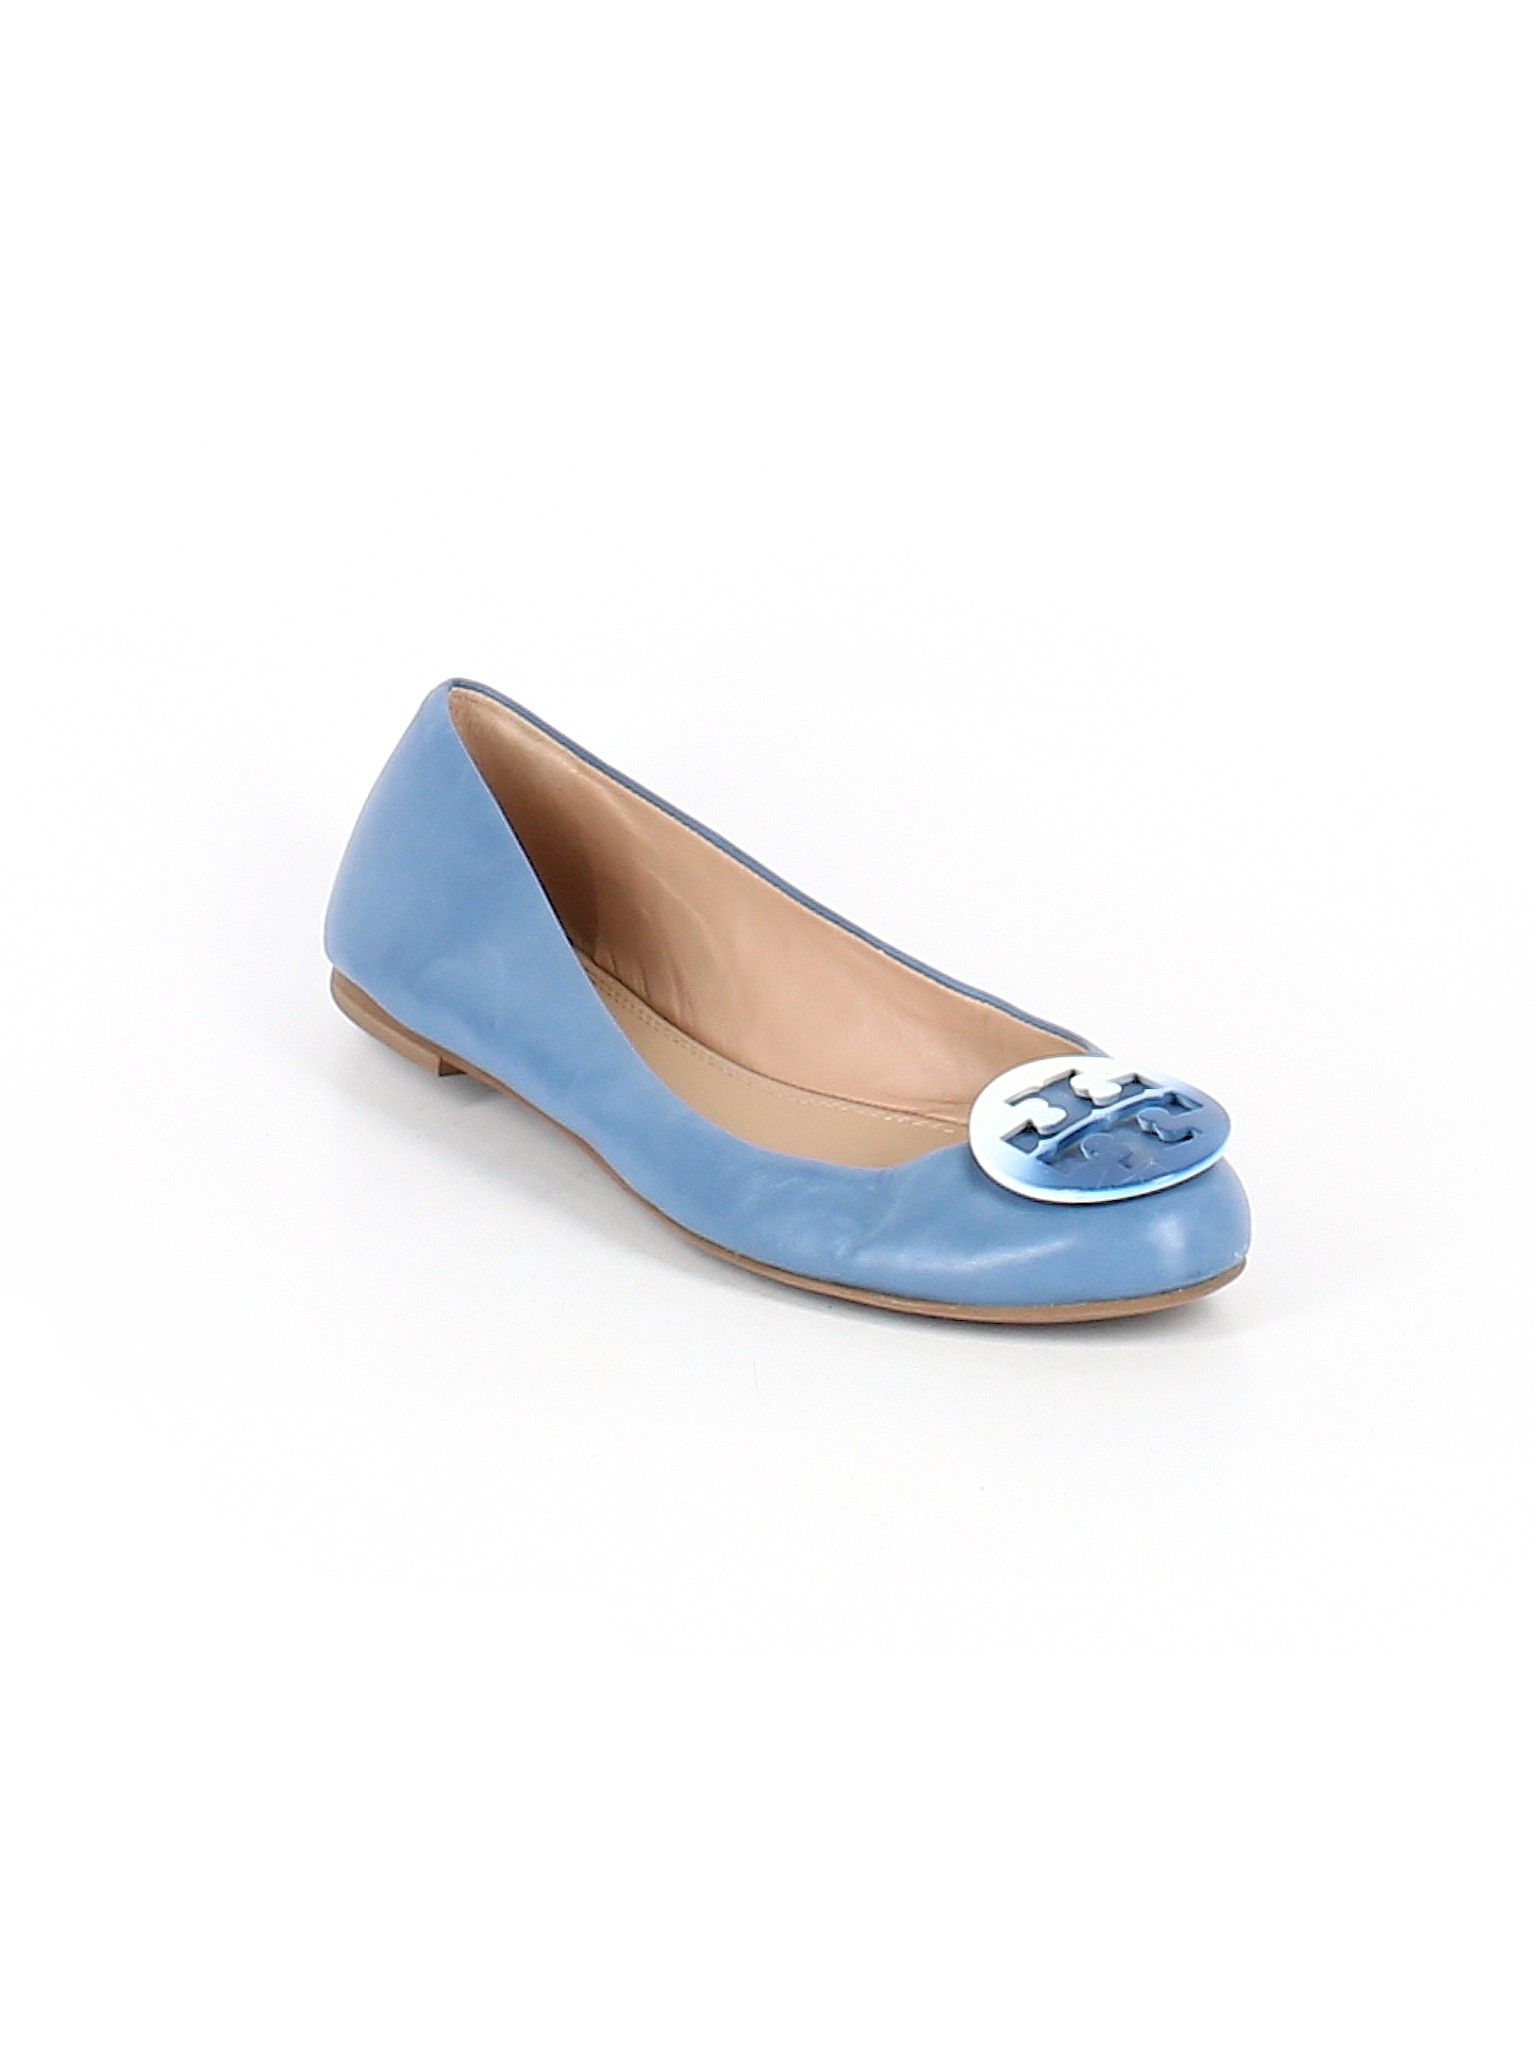 Tory Burch Flats Size 9: Blue Women's Clothing - 45576352 | thredUP